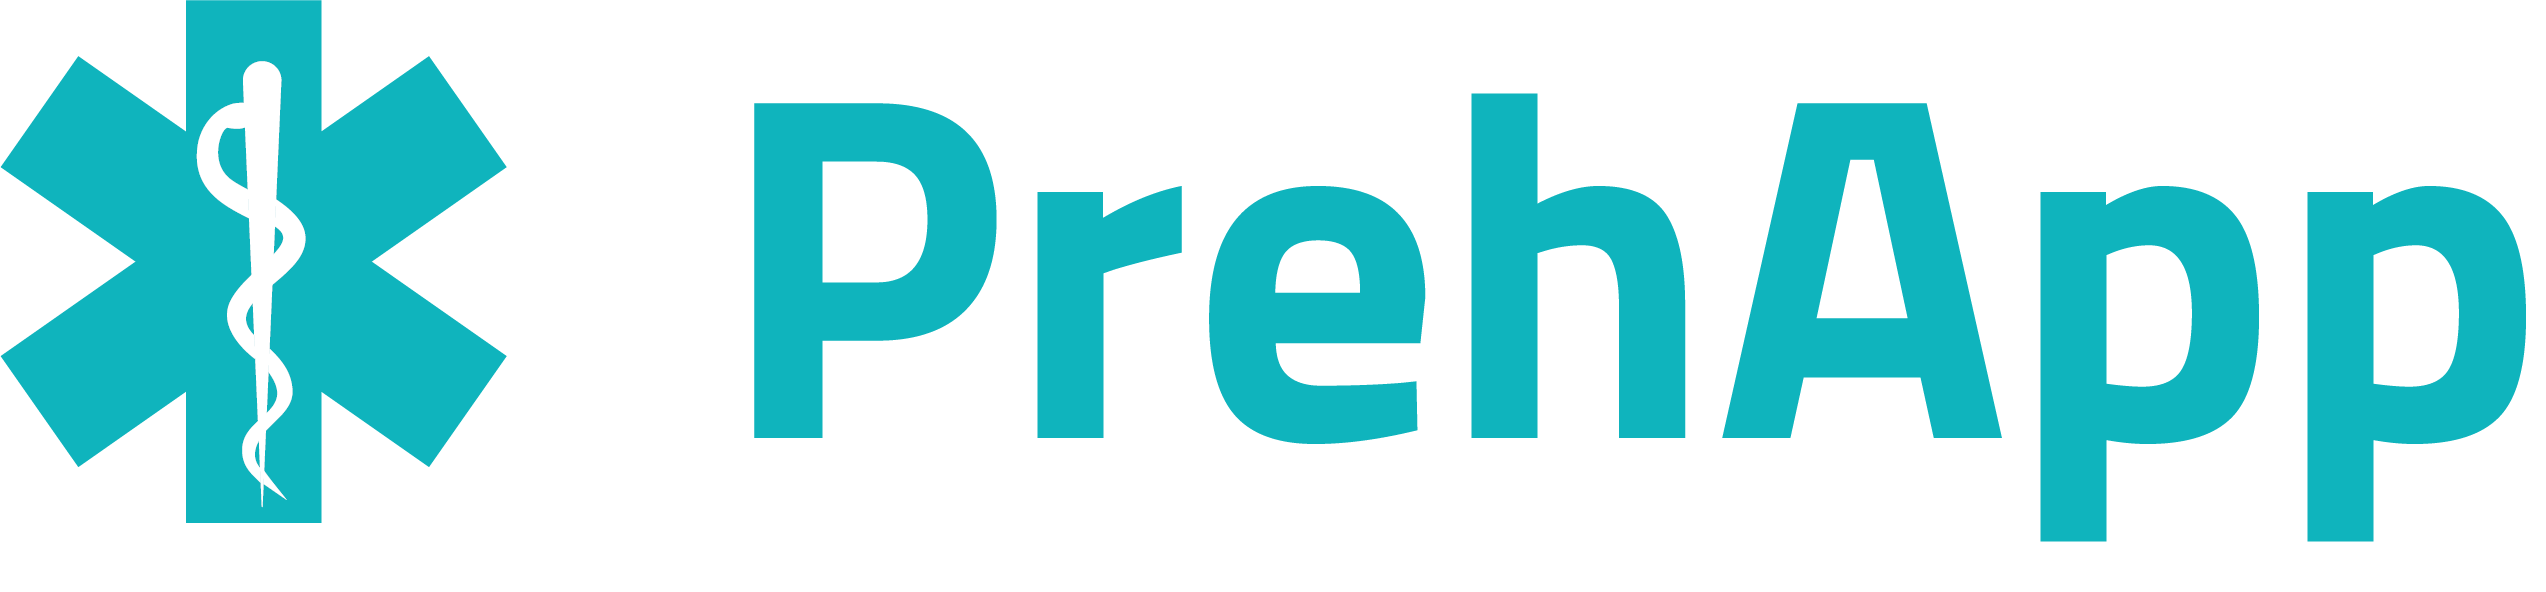 prehapp-gmbh-logo